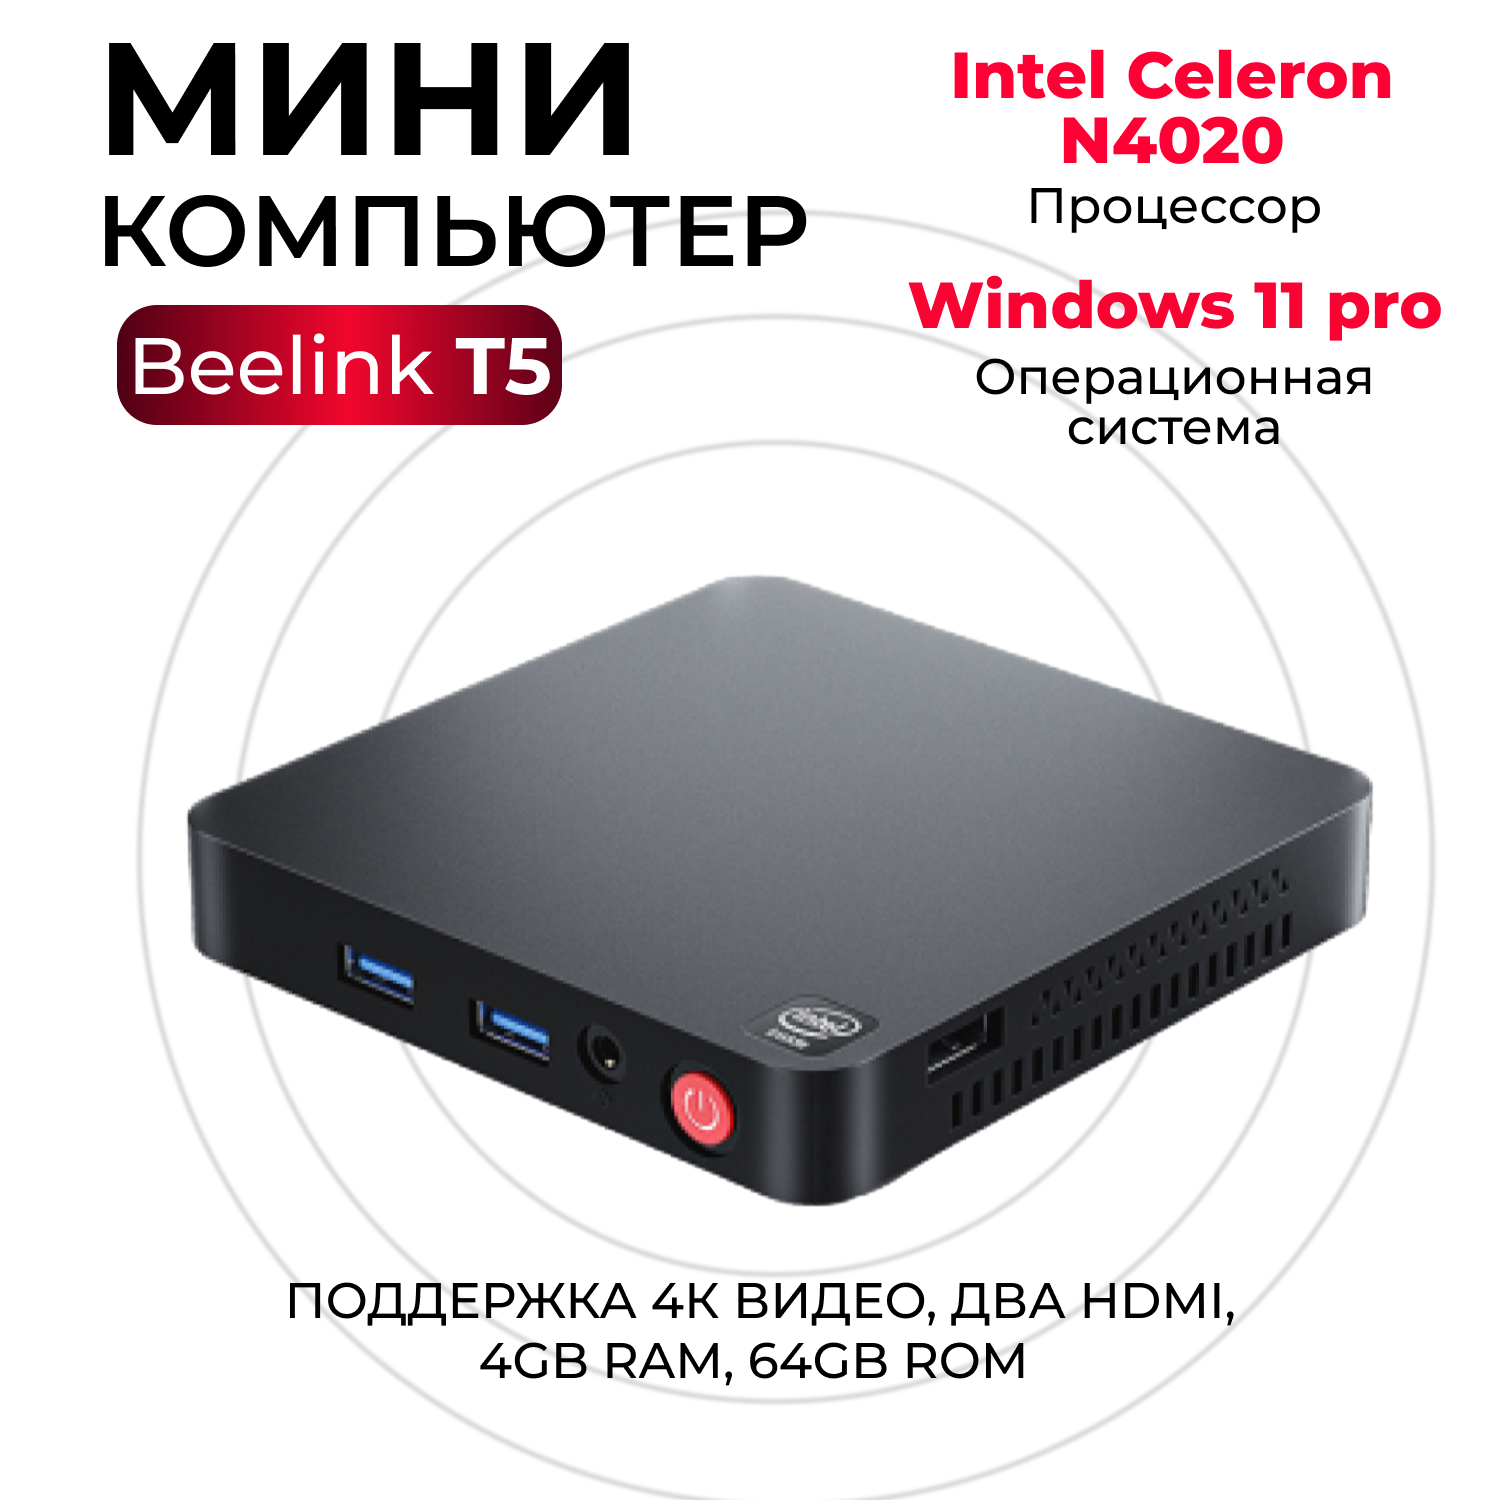 Неттоп Мини ПК Bееlink T5 Intel celeron N4020 Windows 11 pro